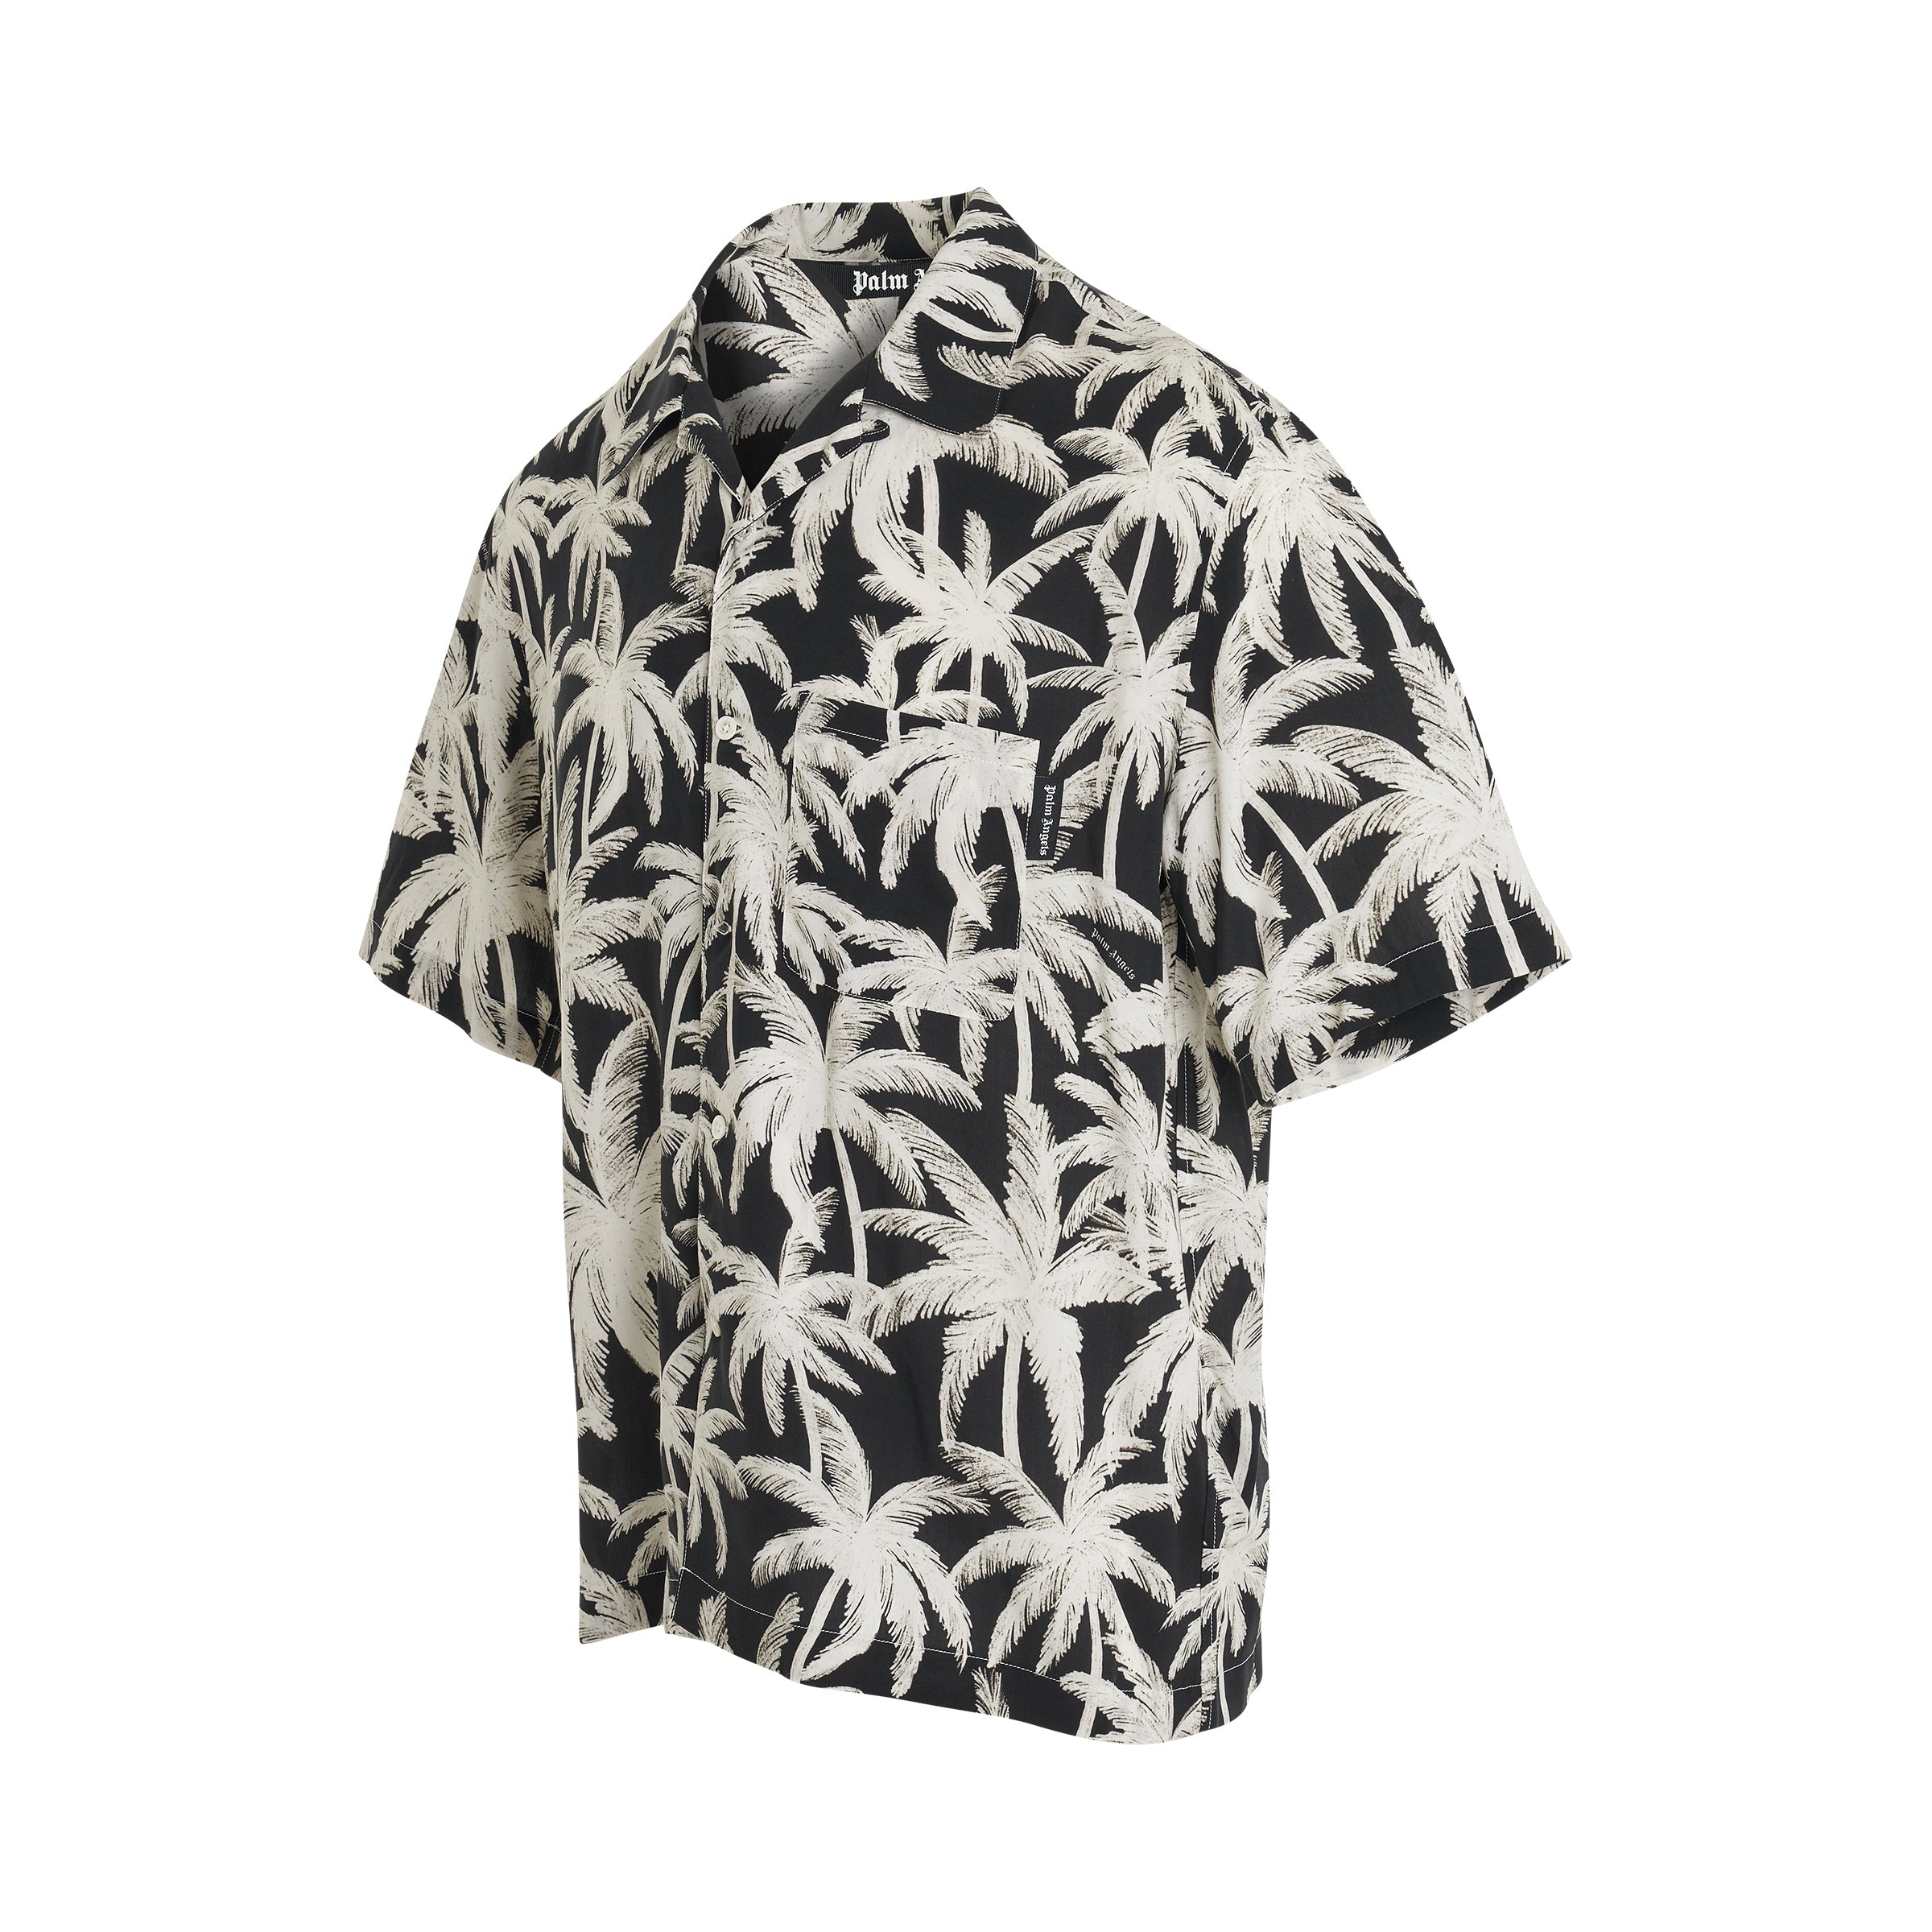 Palms Allover Short Sleeve Shirt in Black/Off White - 2